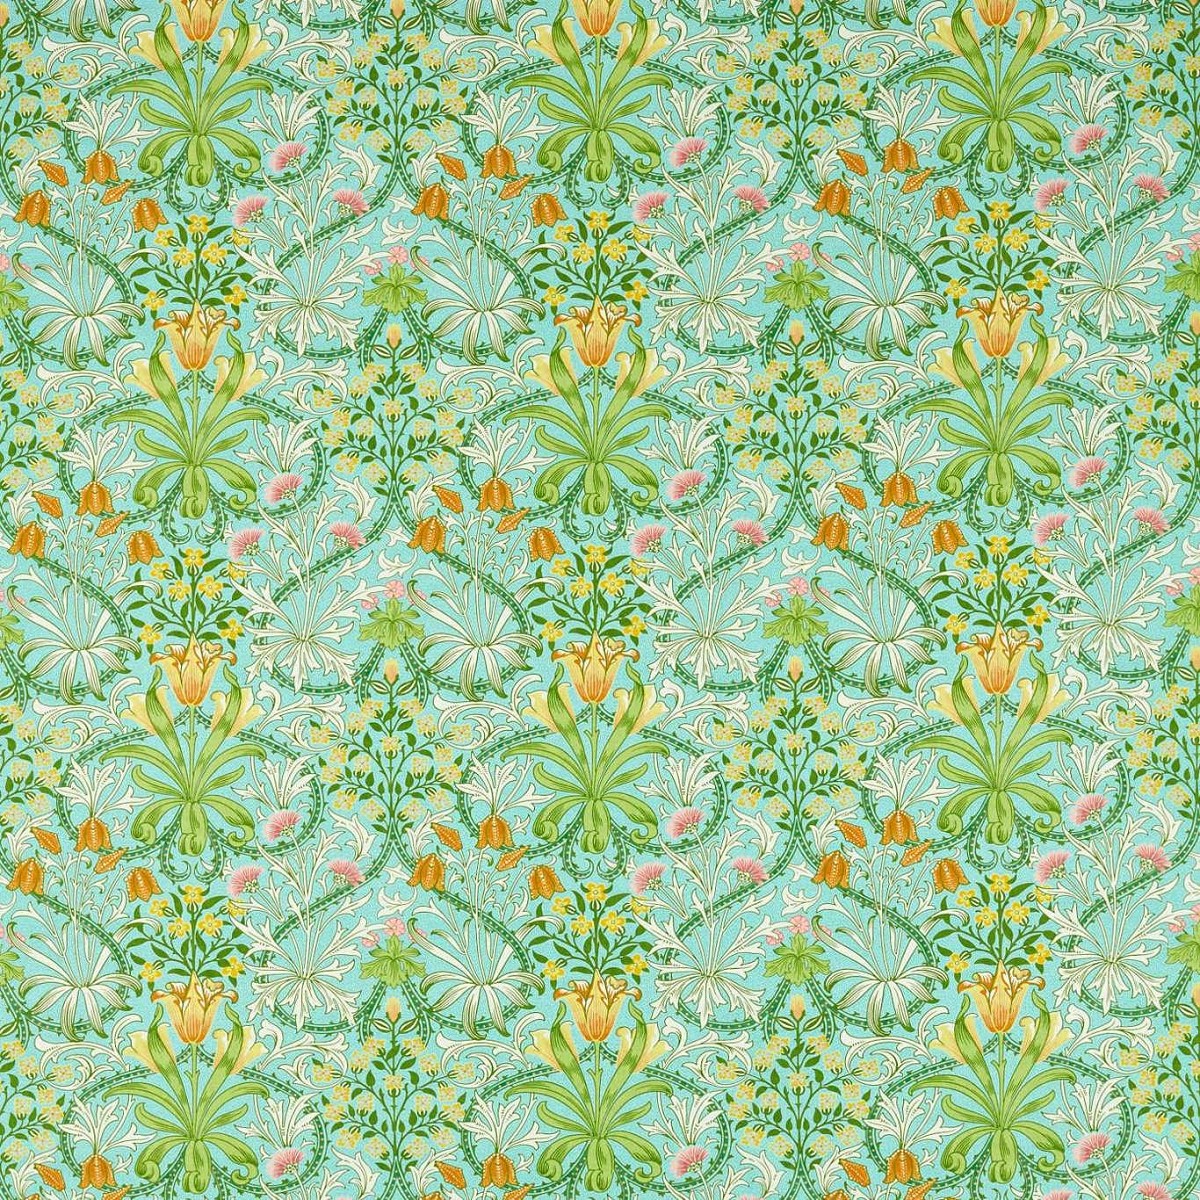 Woodland Weeds Orange/Turquoise Fabric by William Morris & Co.